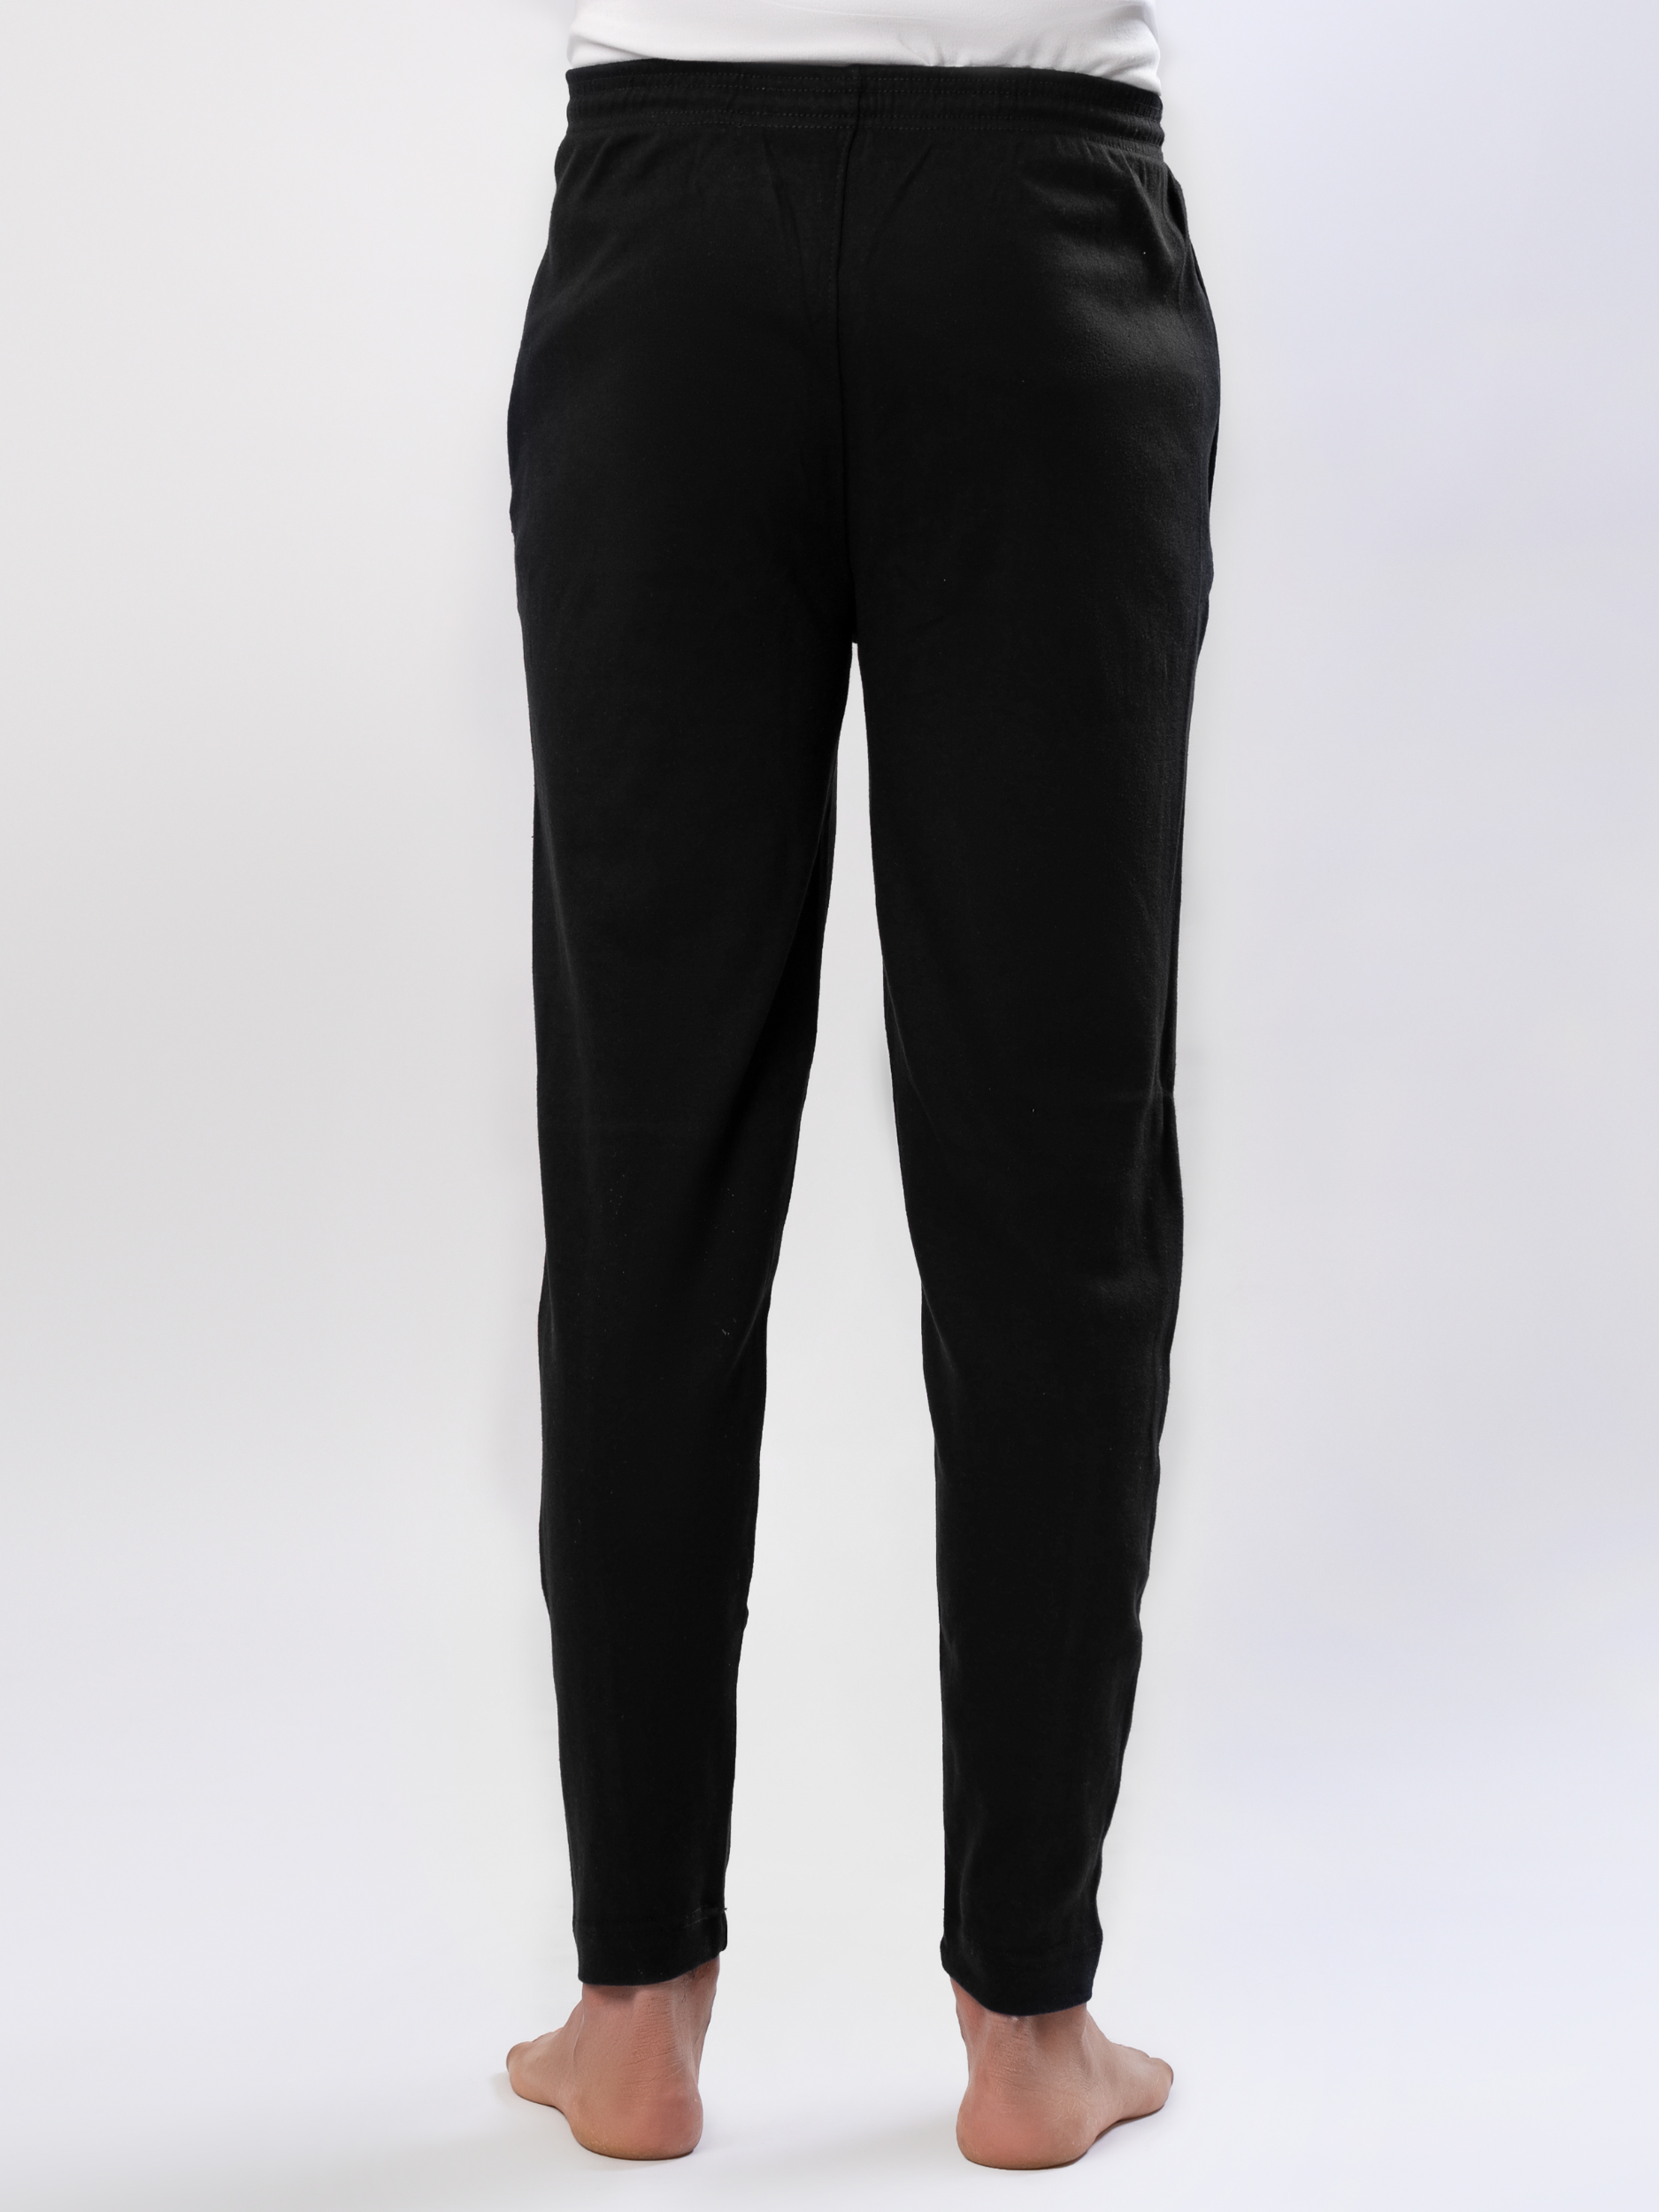 Max Zipper Premium Fitted Trouser (Black) – Hinz Knit